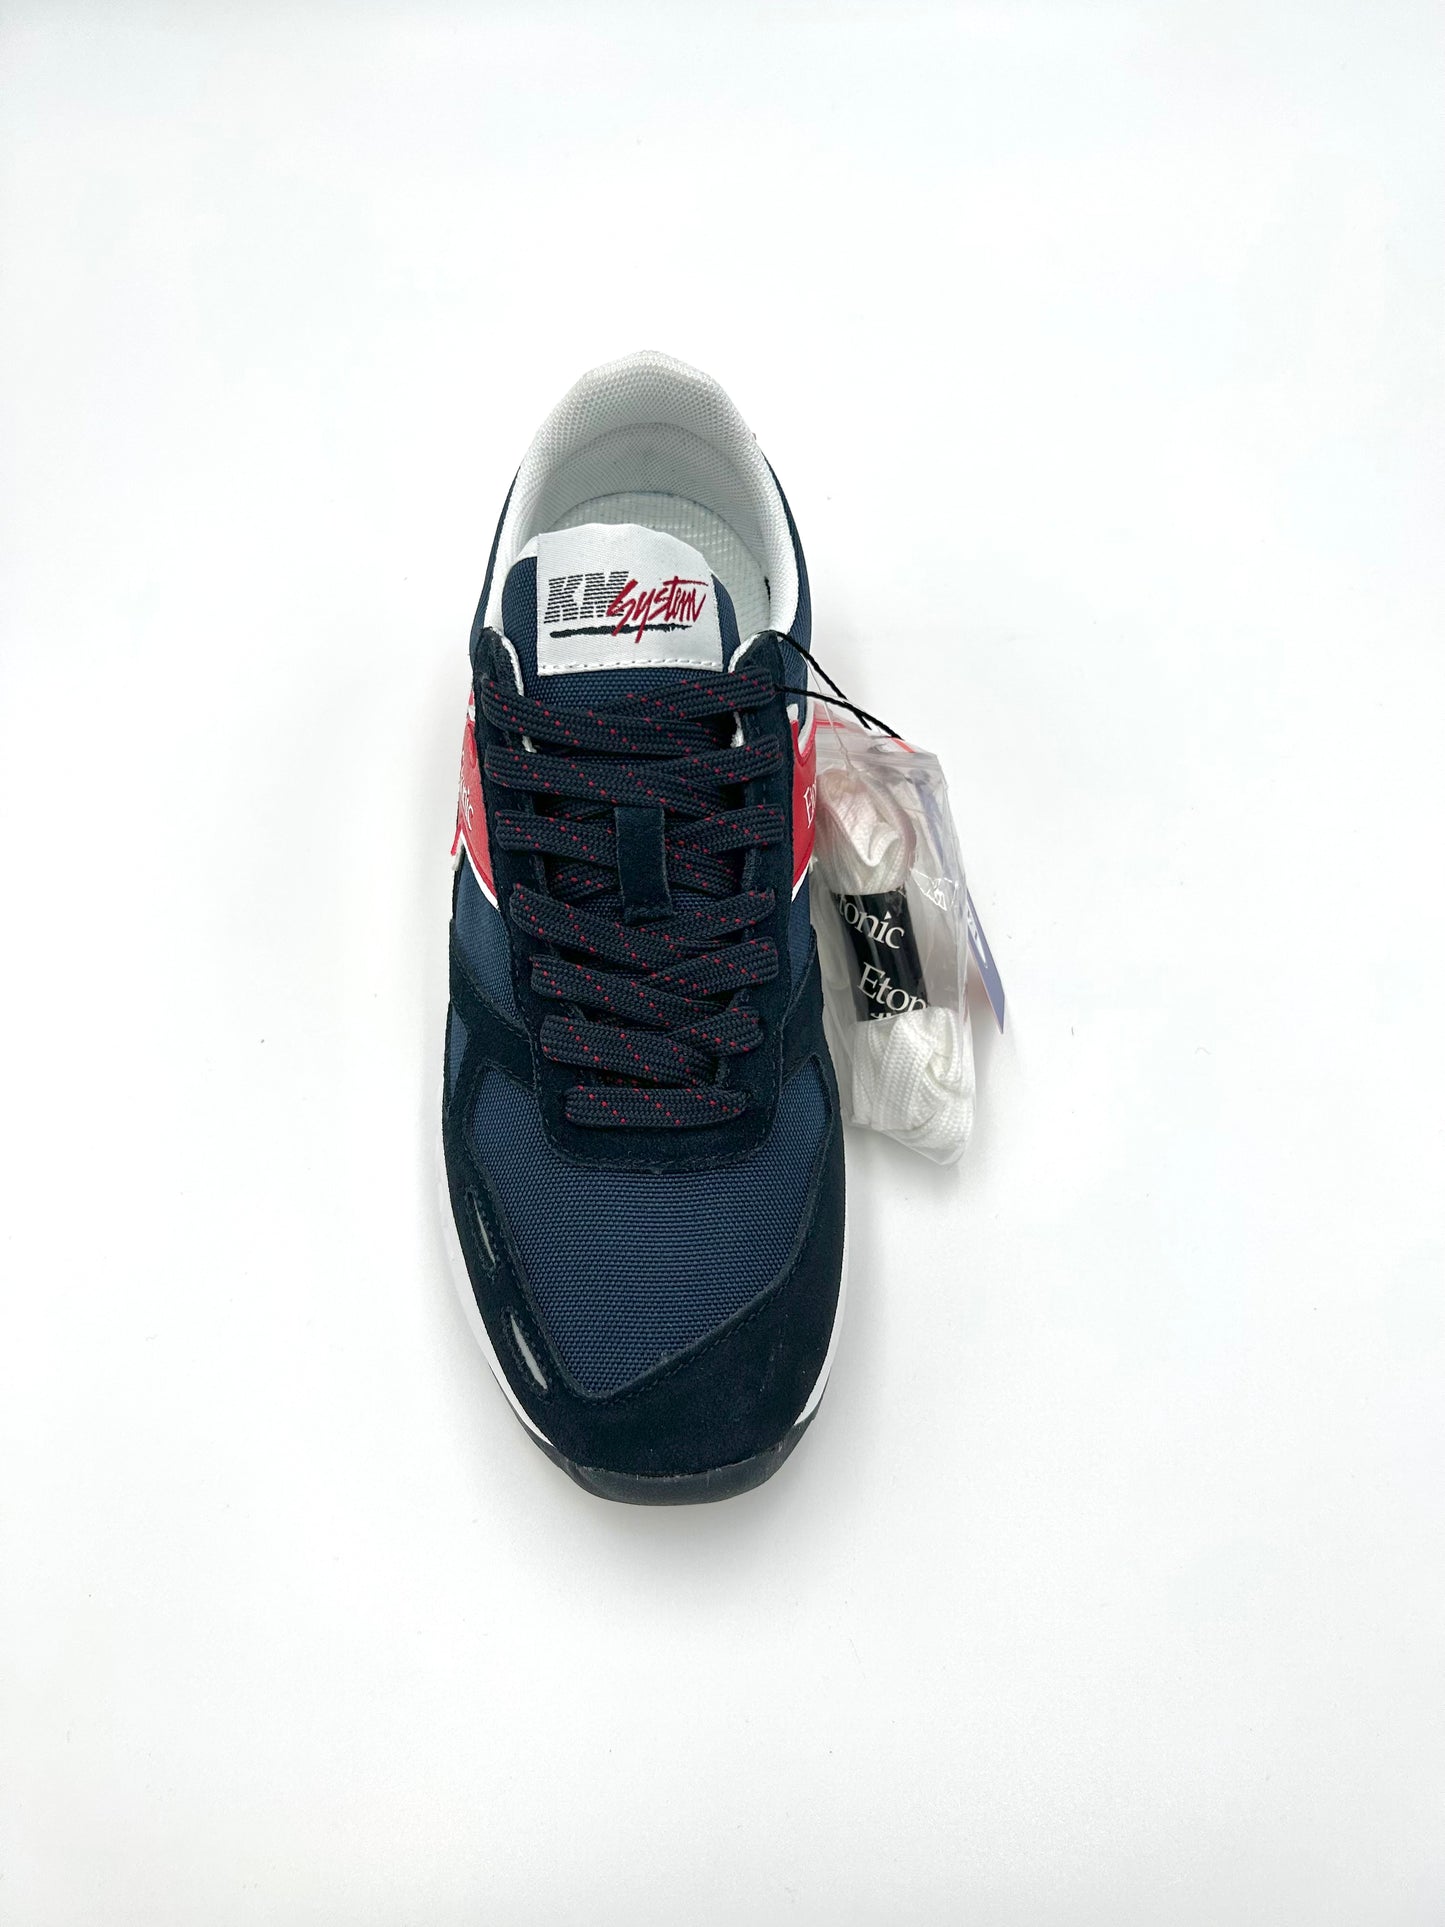 Etonic Sneakers KM 538 blue navy ETM 215605 03 - Etonic